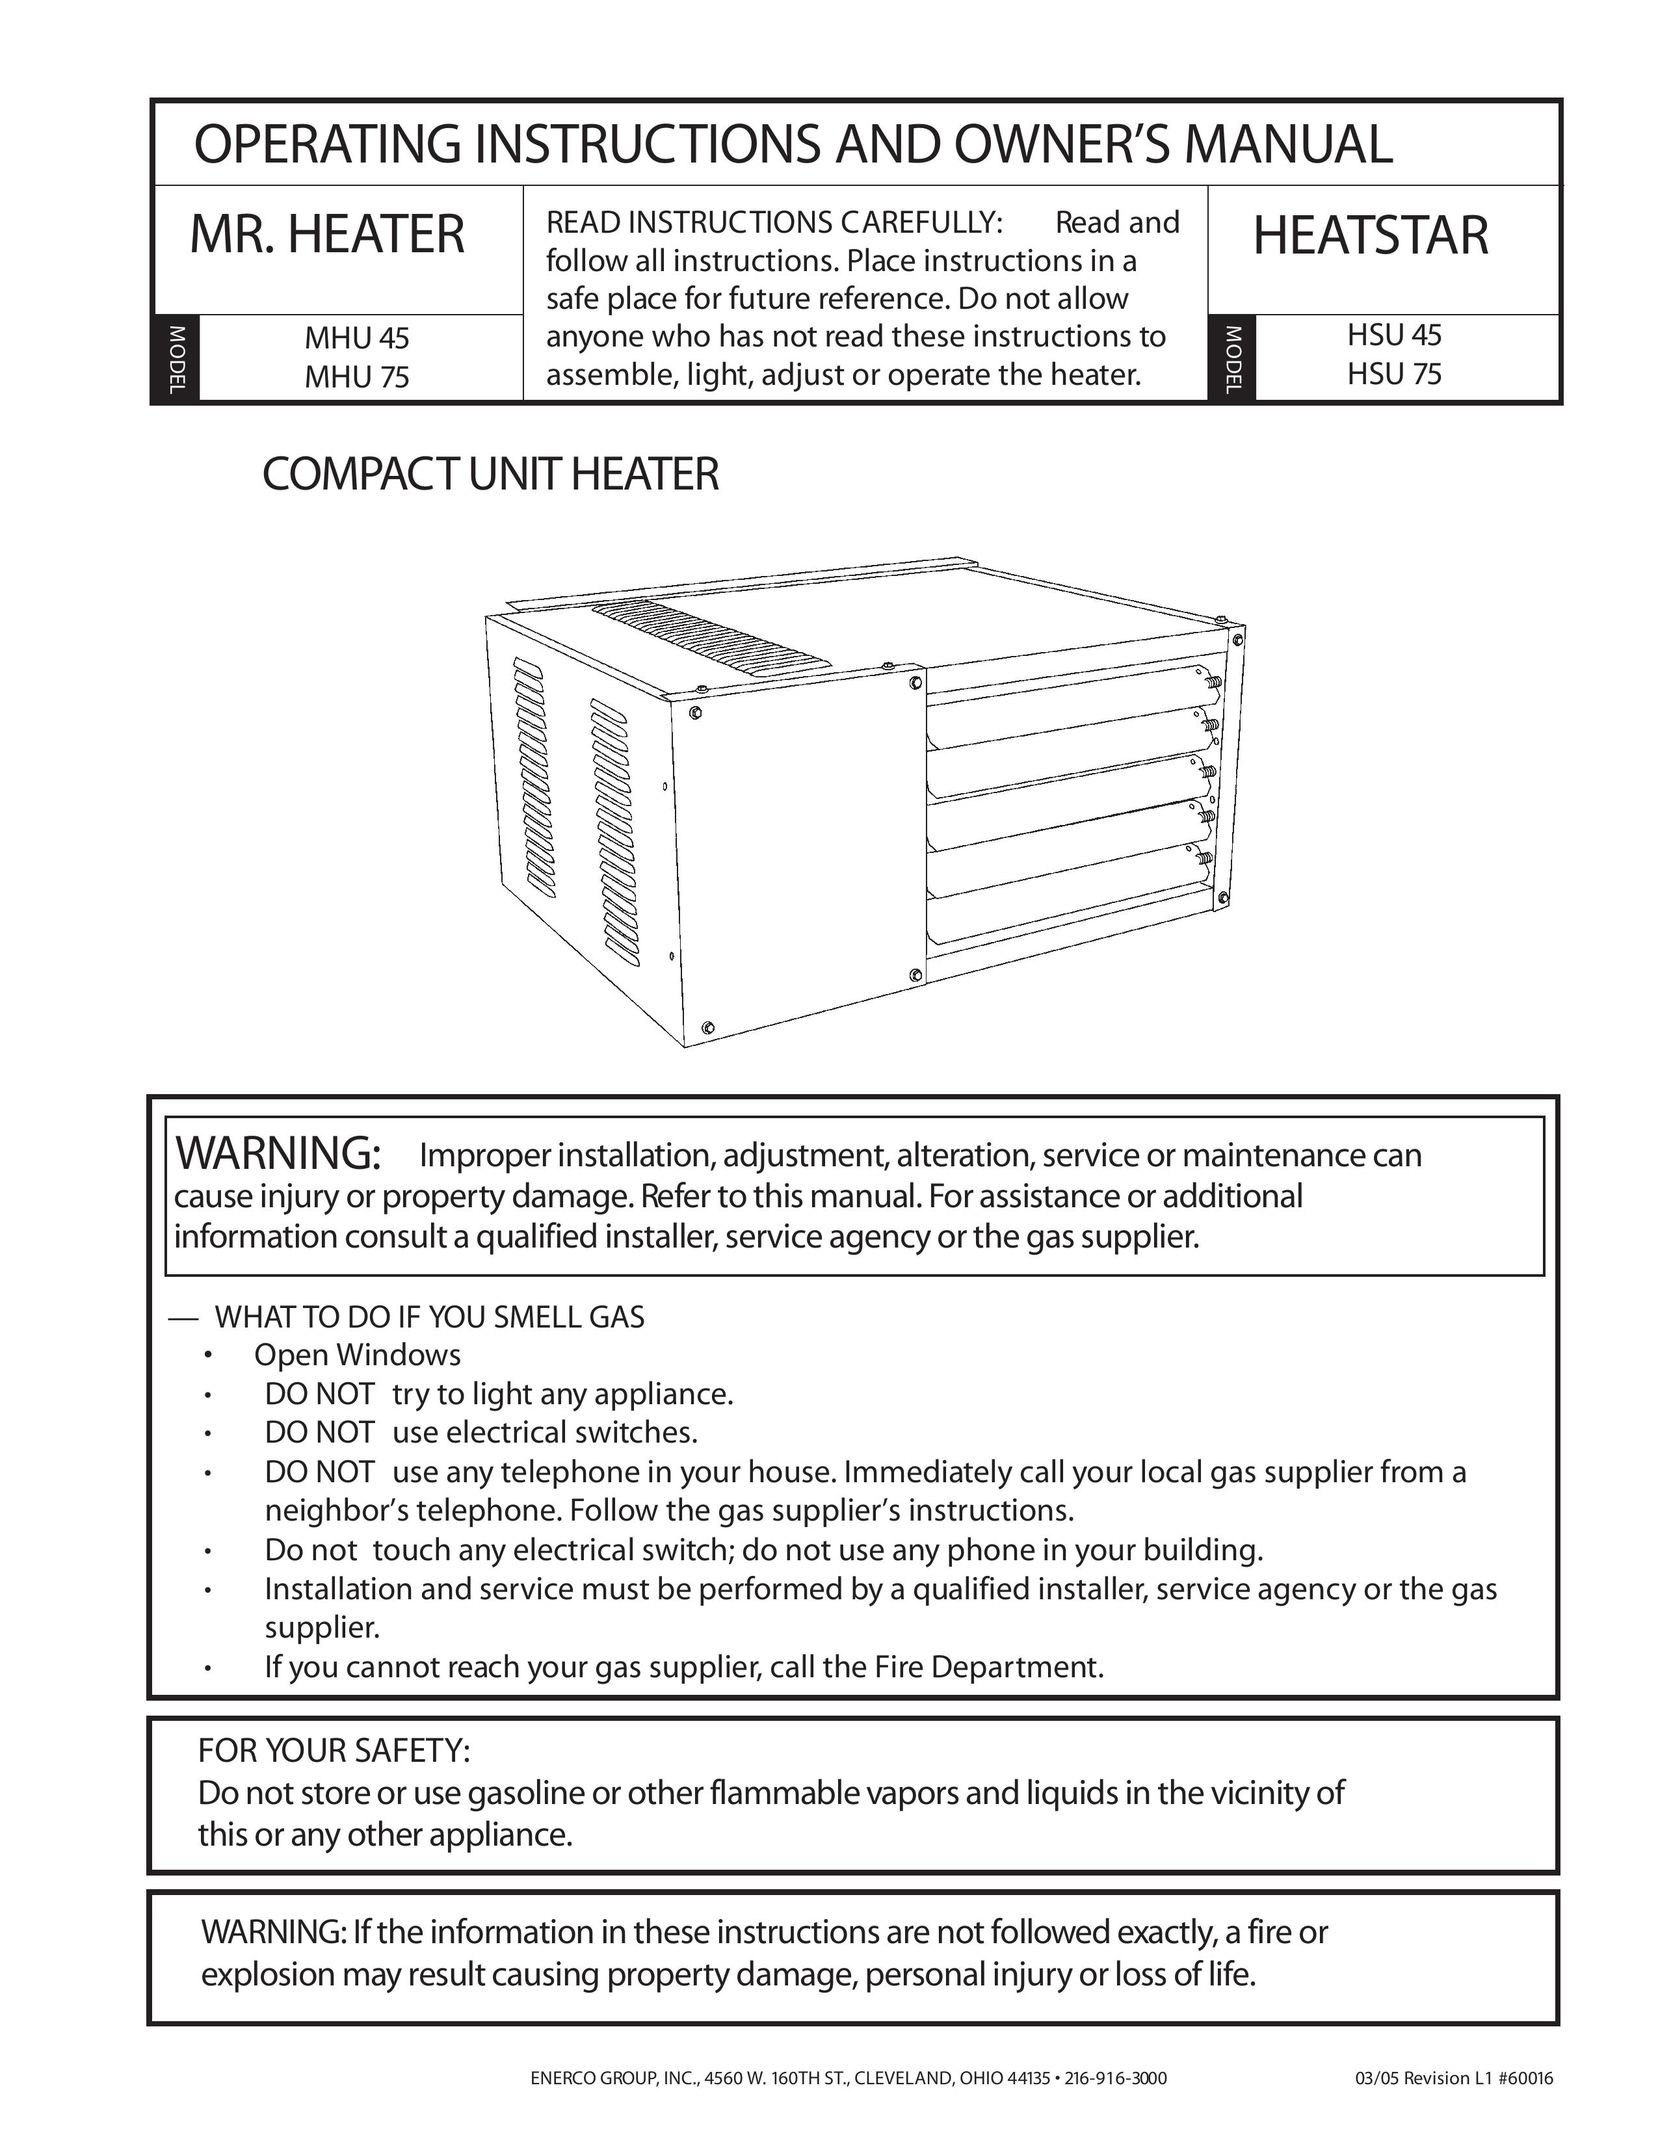 Enerco MHU 45 Electric Heater User Manual